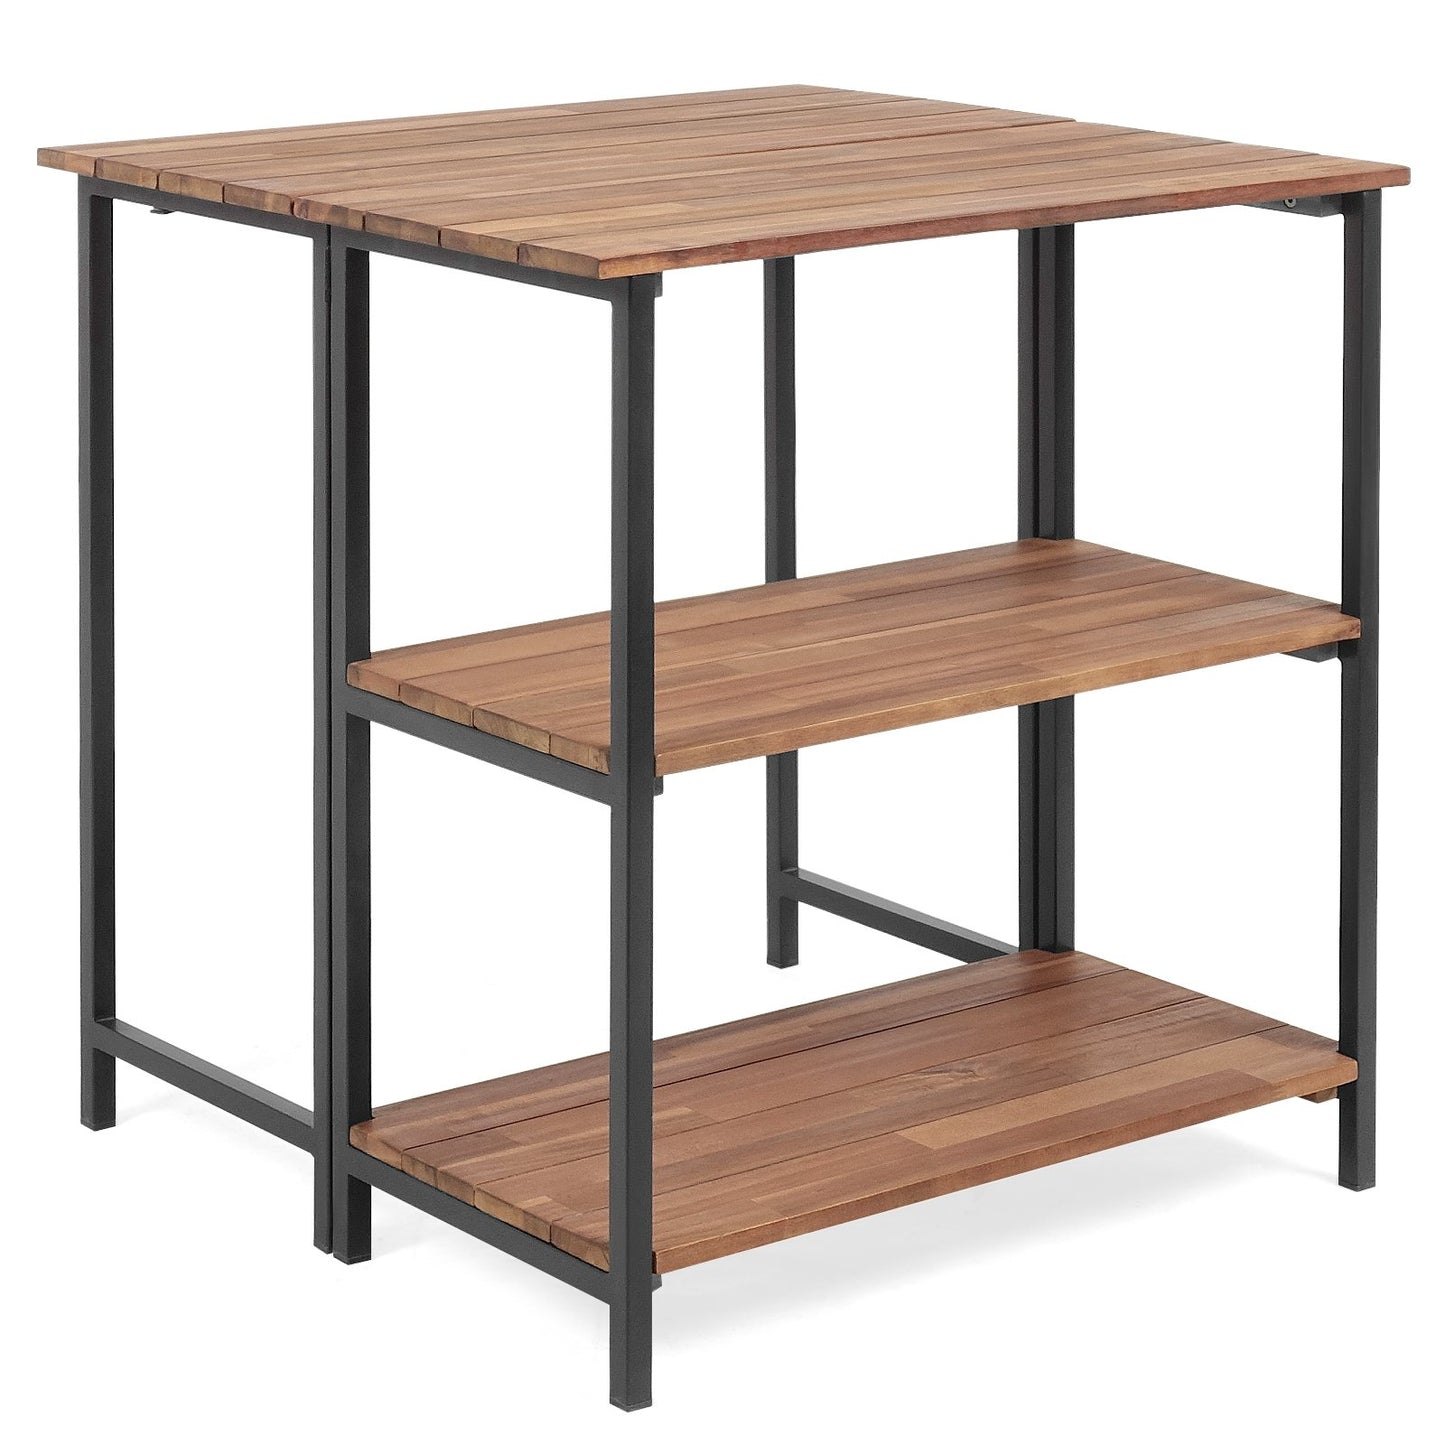 Acacia Wood Patio Folding Dining Table Storage Shelves, Natural